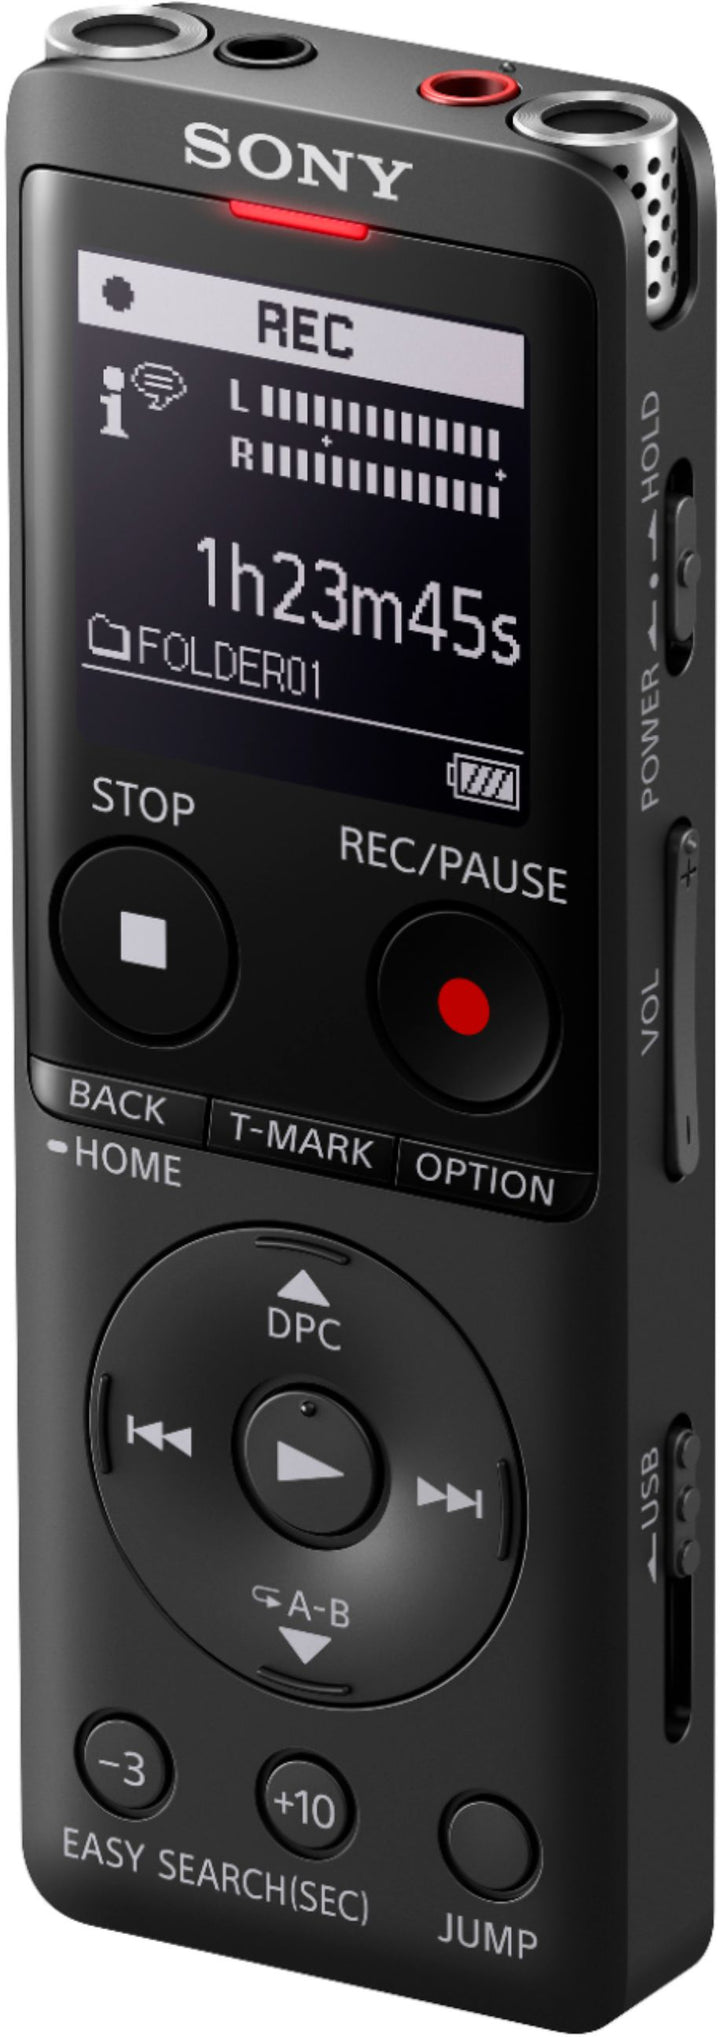 Sony - UX Series Digital Voice Recorder - Black_4